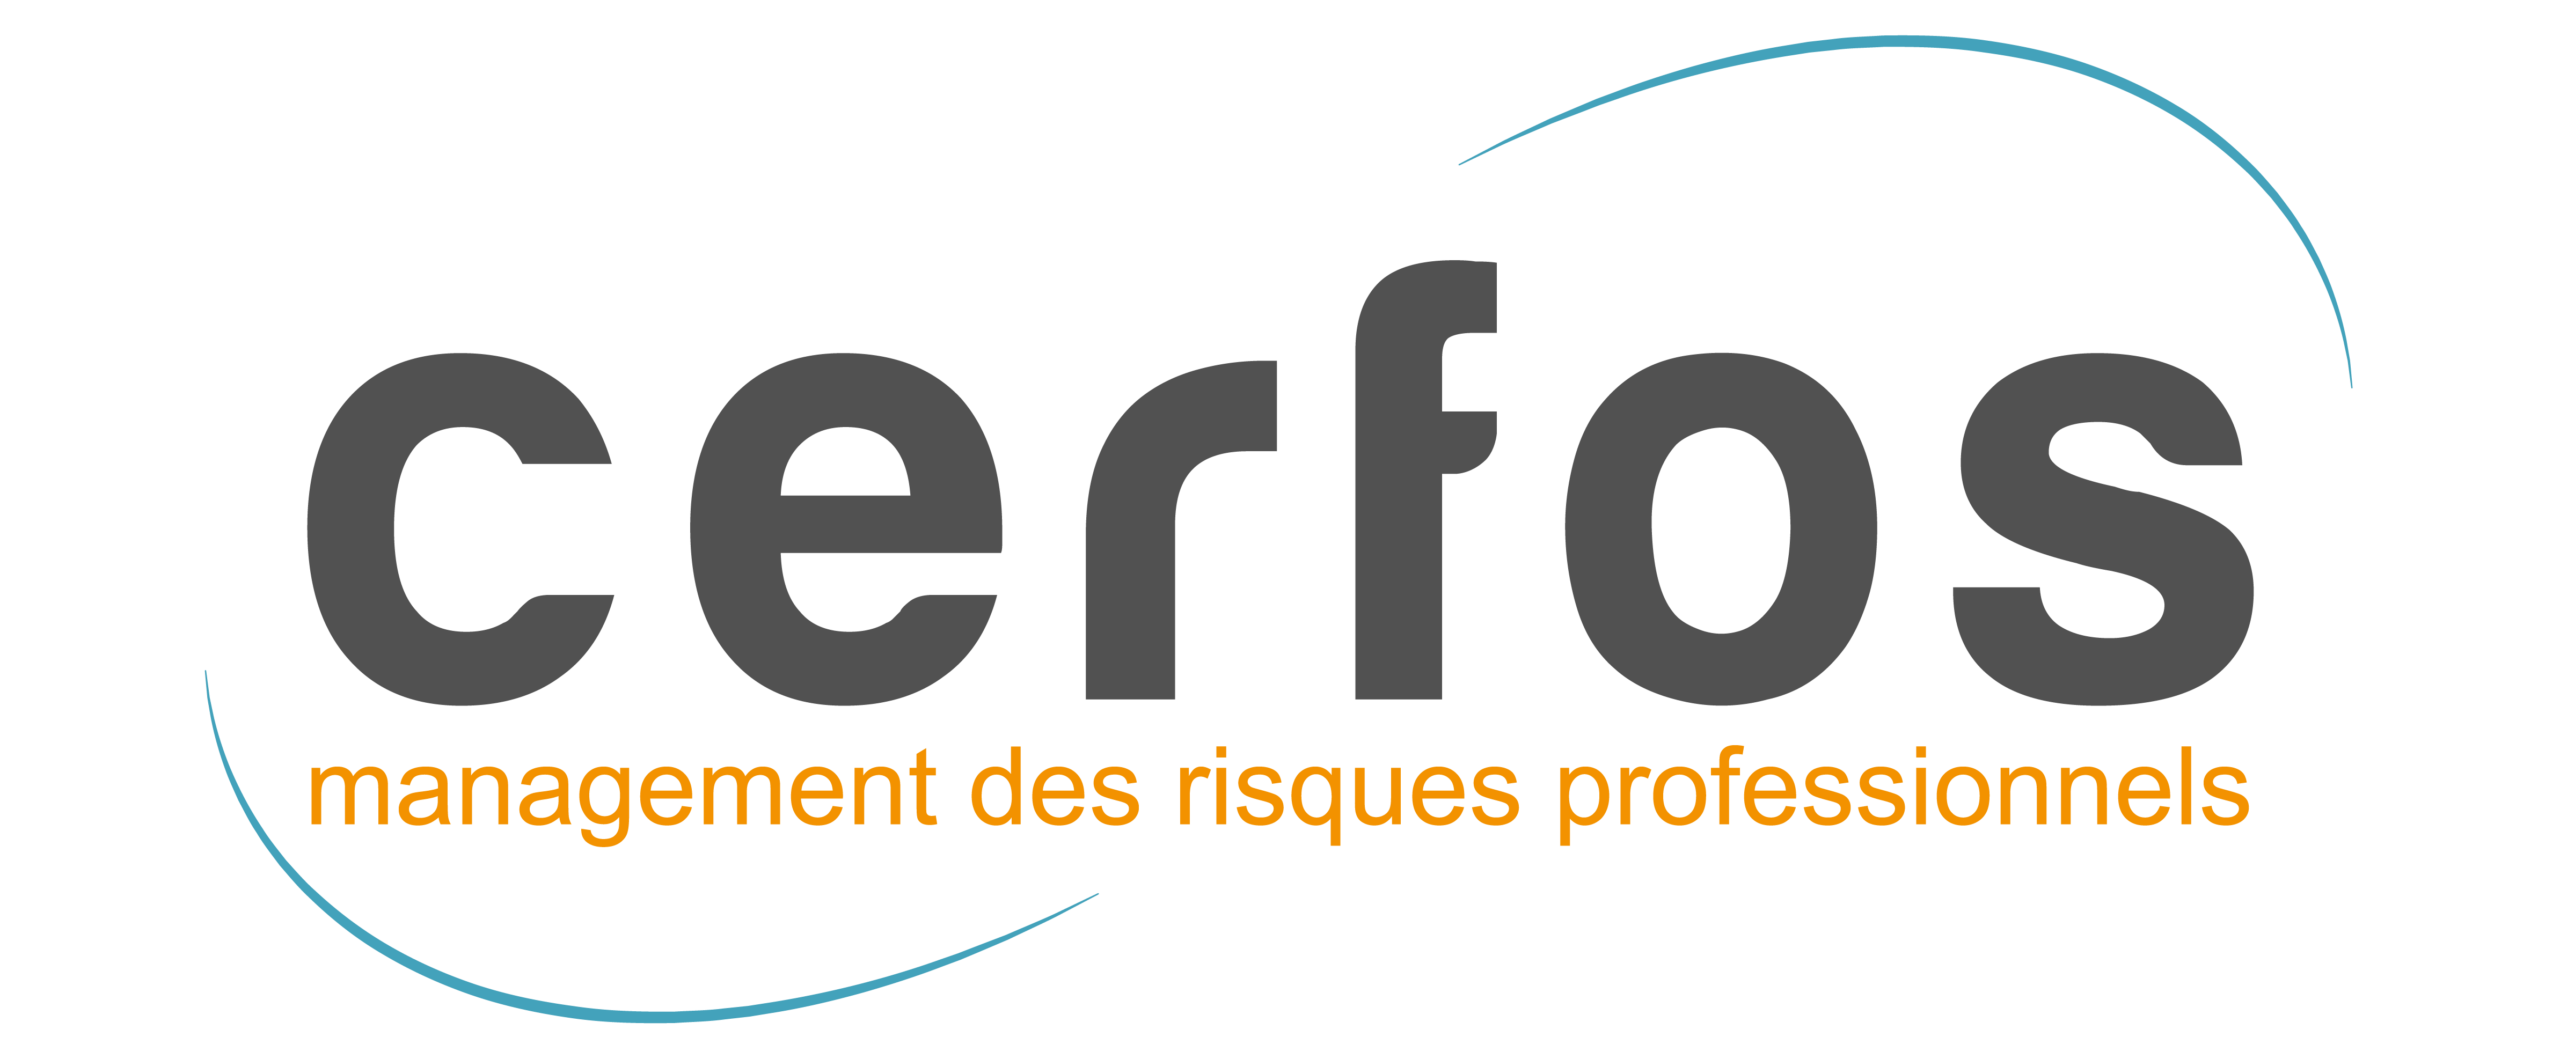 Logo du CERFOS